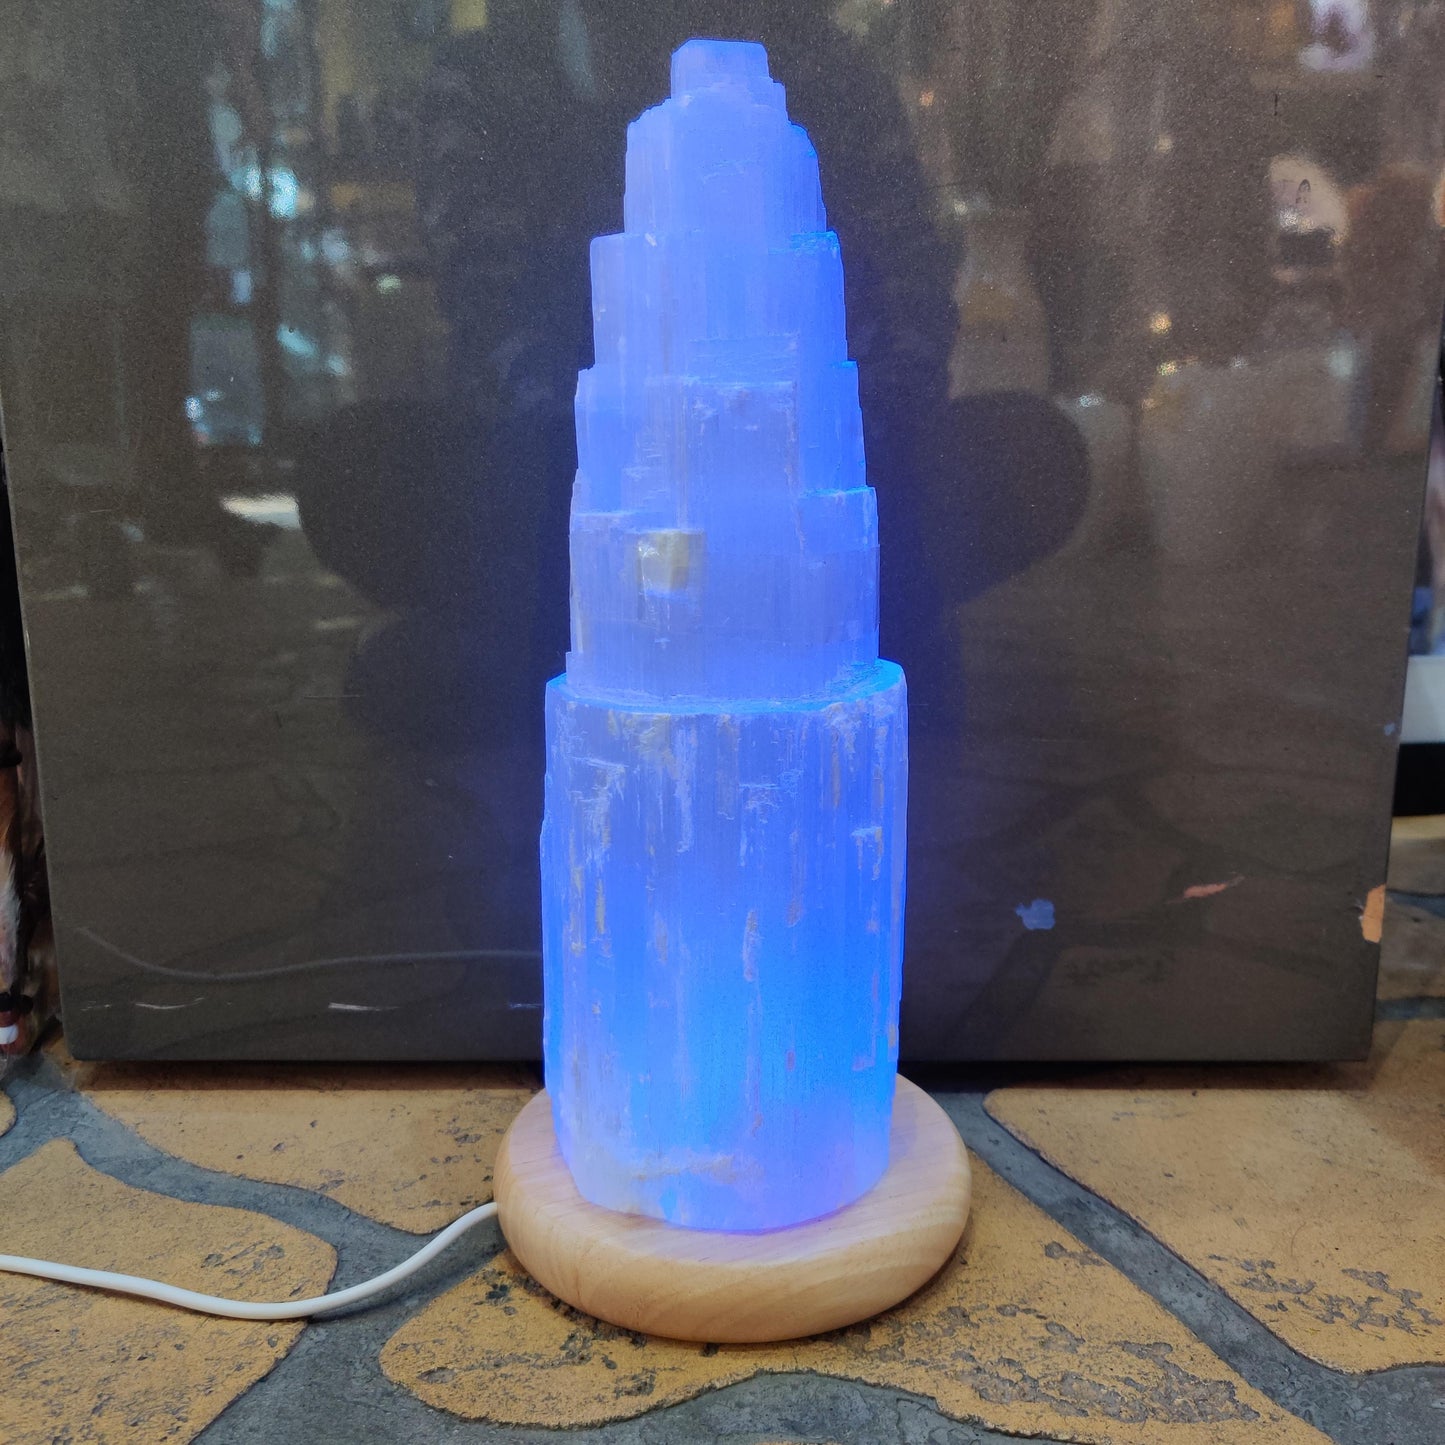 Large 30cm Selenite LED Lamp with Mood Change Lighting - Rivendell Shop